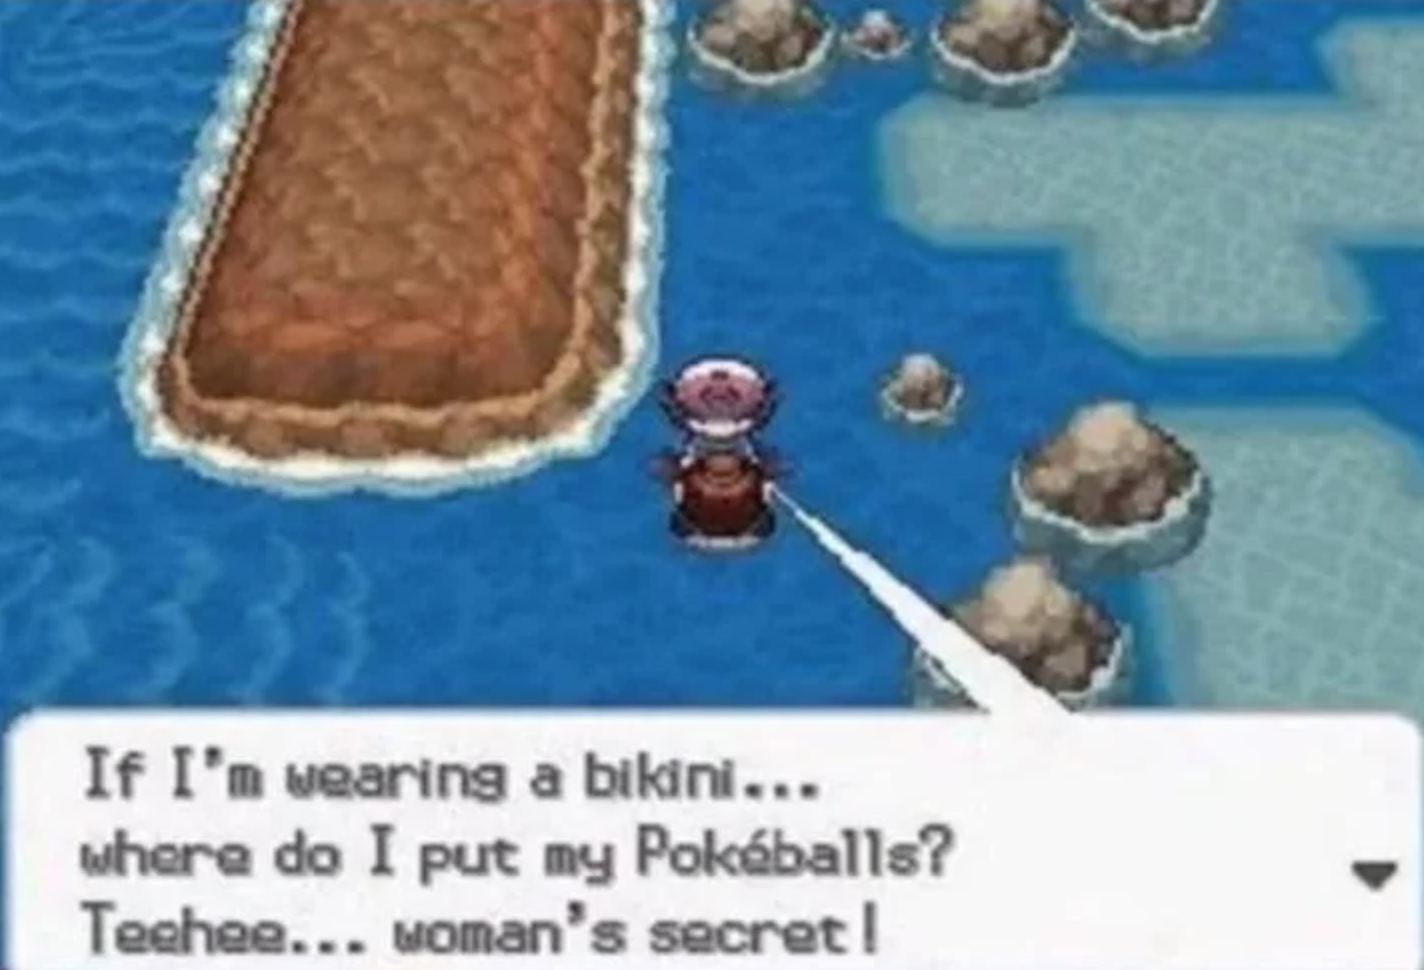 funny gaming memes  - - if i m wearing a bikini pokeball - If I'm wearing a bikini... where do I put my Pokballs? Teehee... woman's secret!